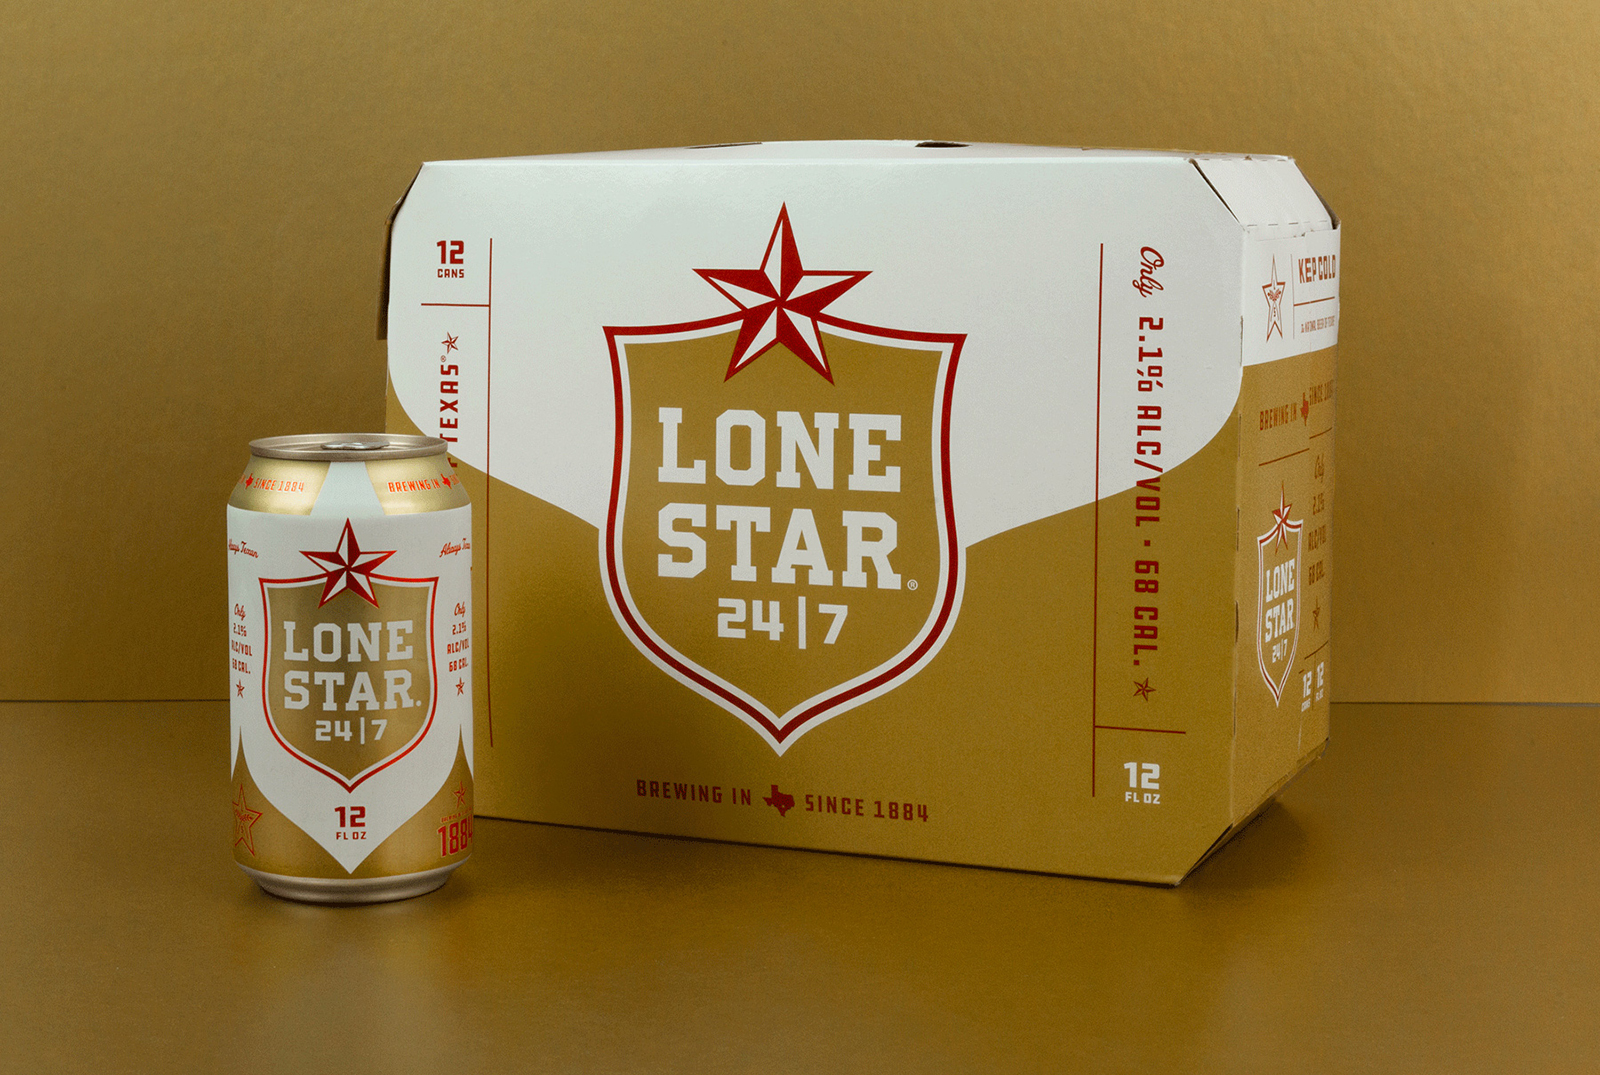  Lone Star孤星啤酒品牌更新全新的品牌VI视觉和包装设计-深圳VI设计